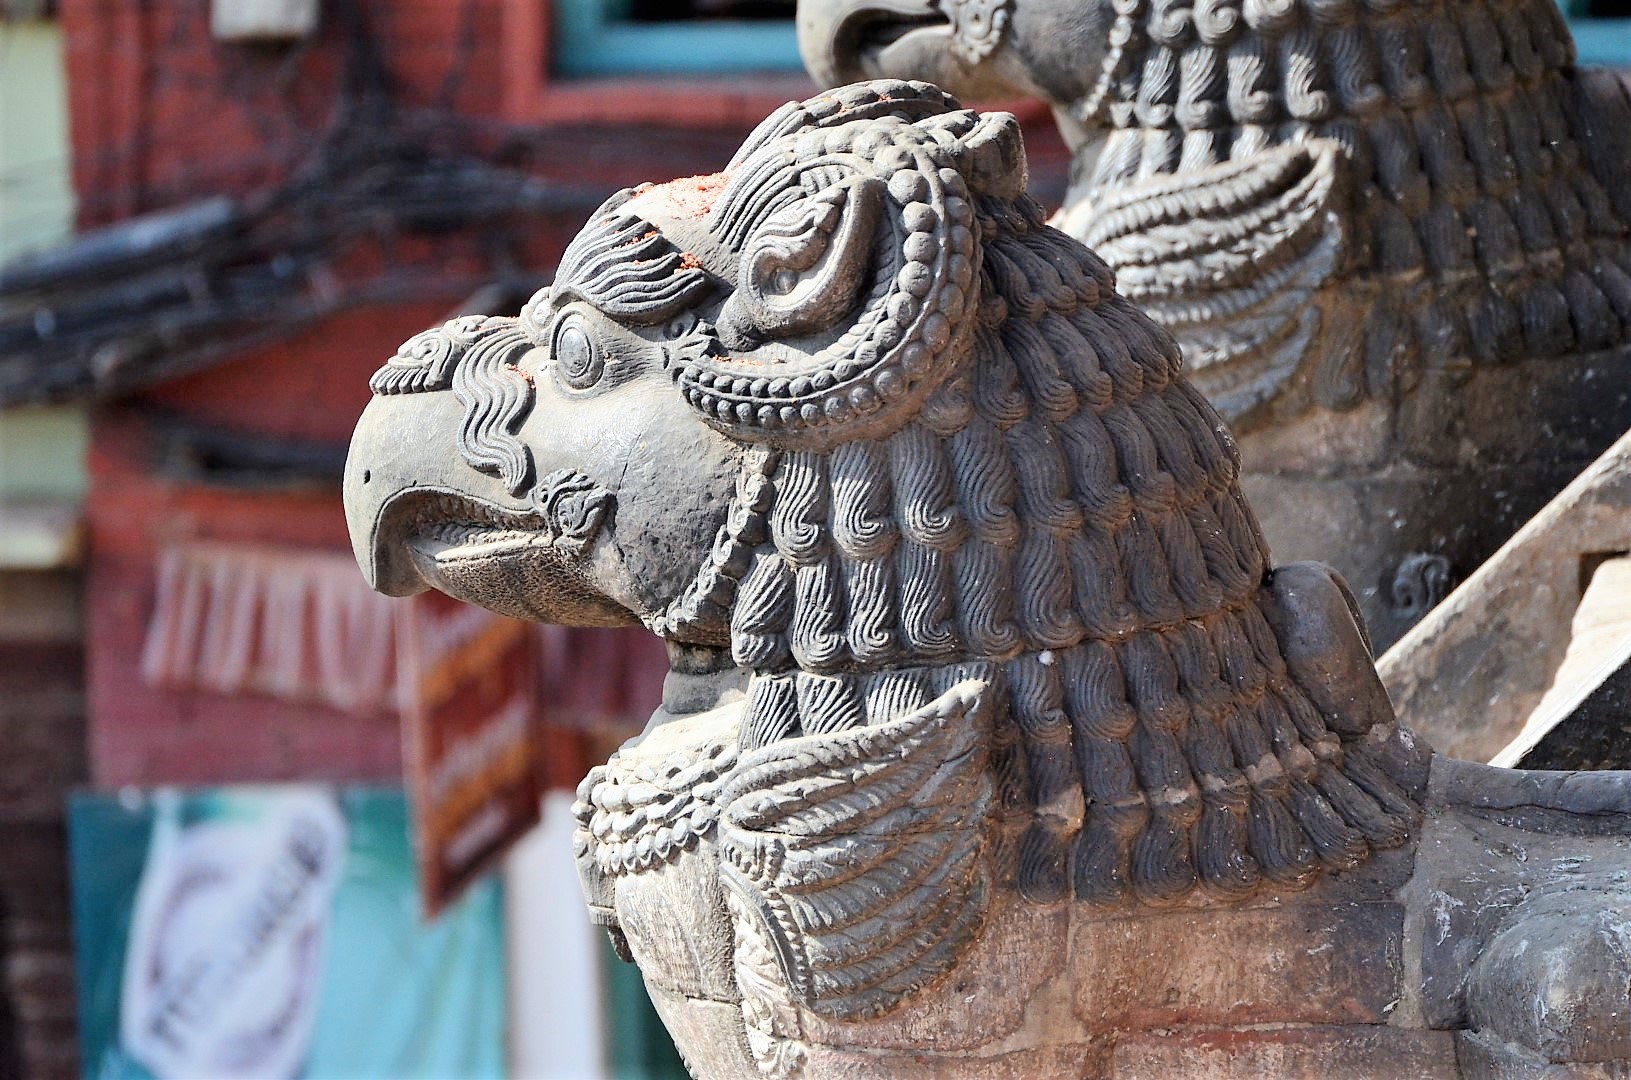 Bhaktapur Durbar plein, highlight rondreis door Nepal 